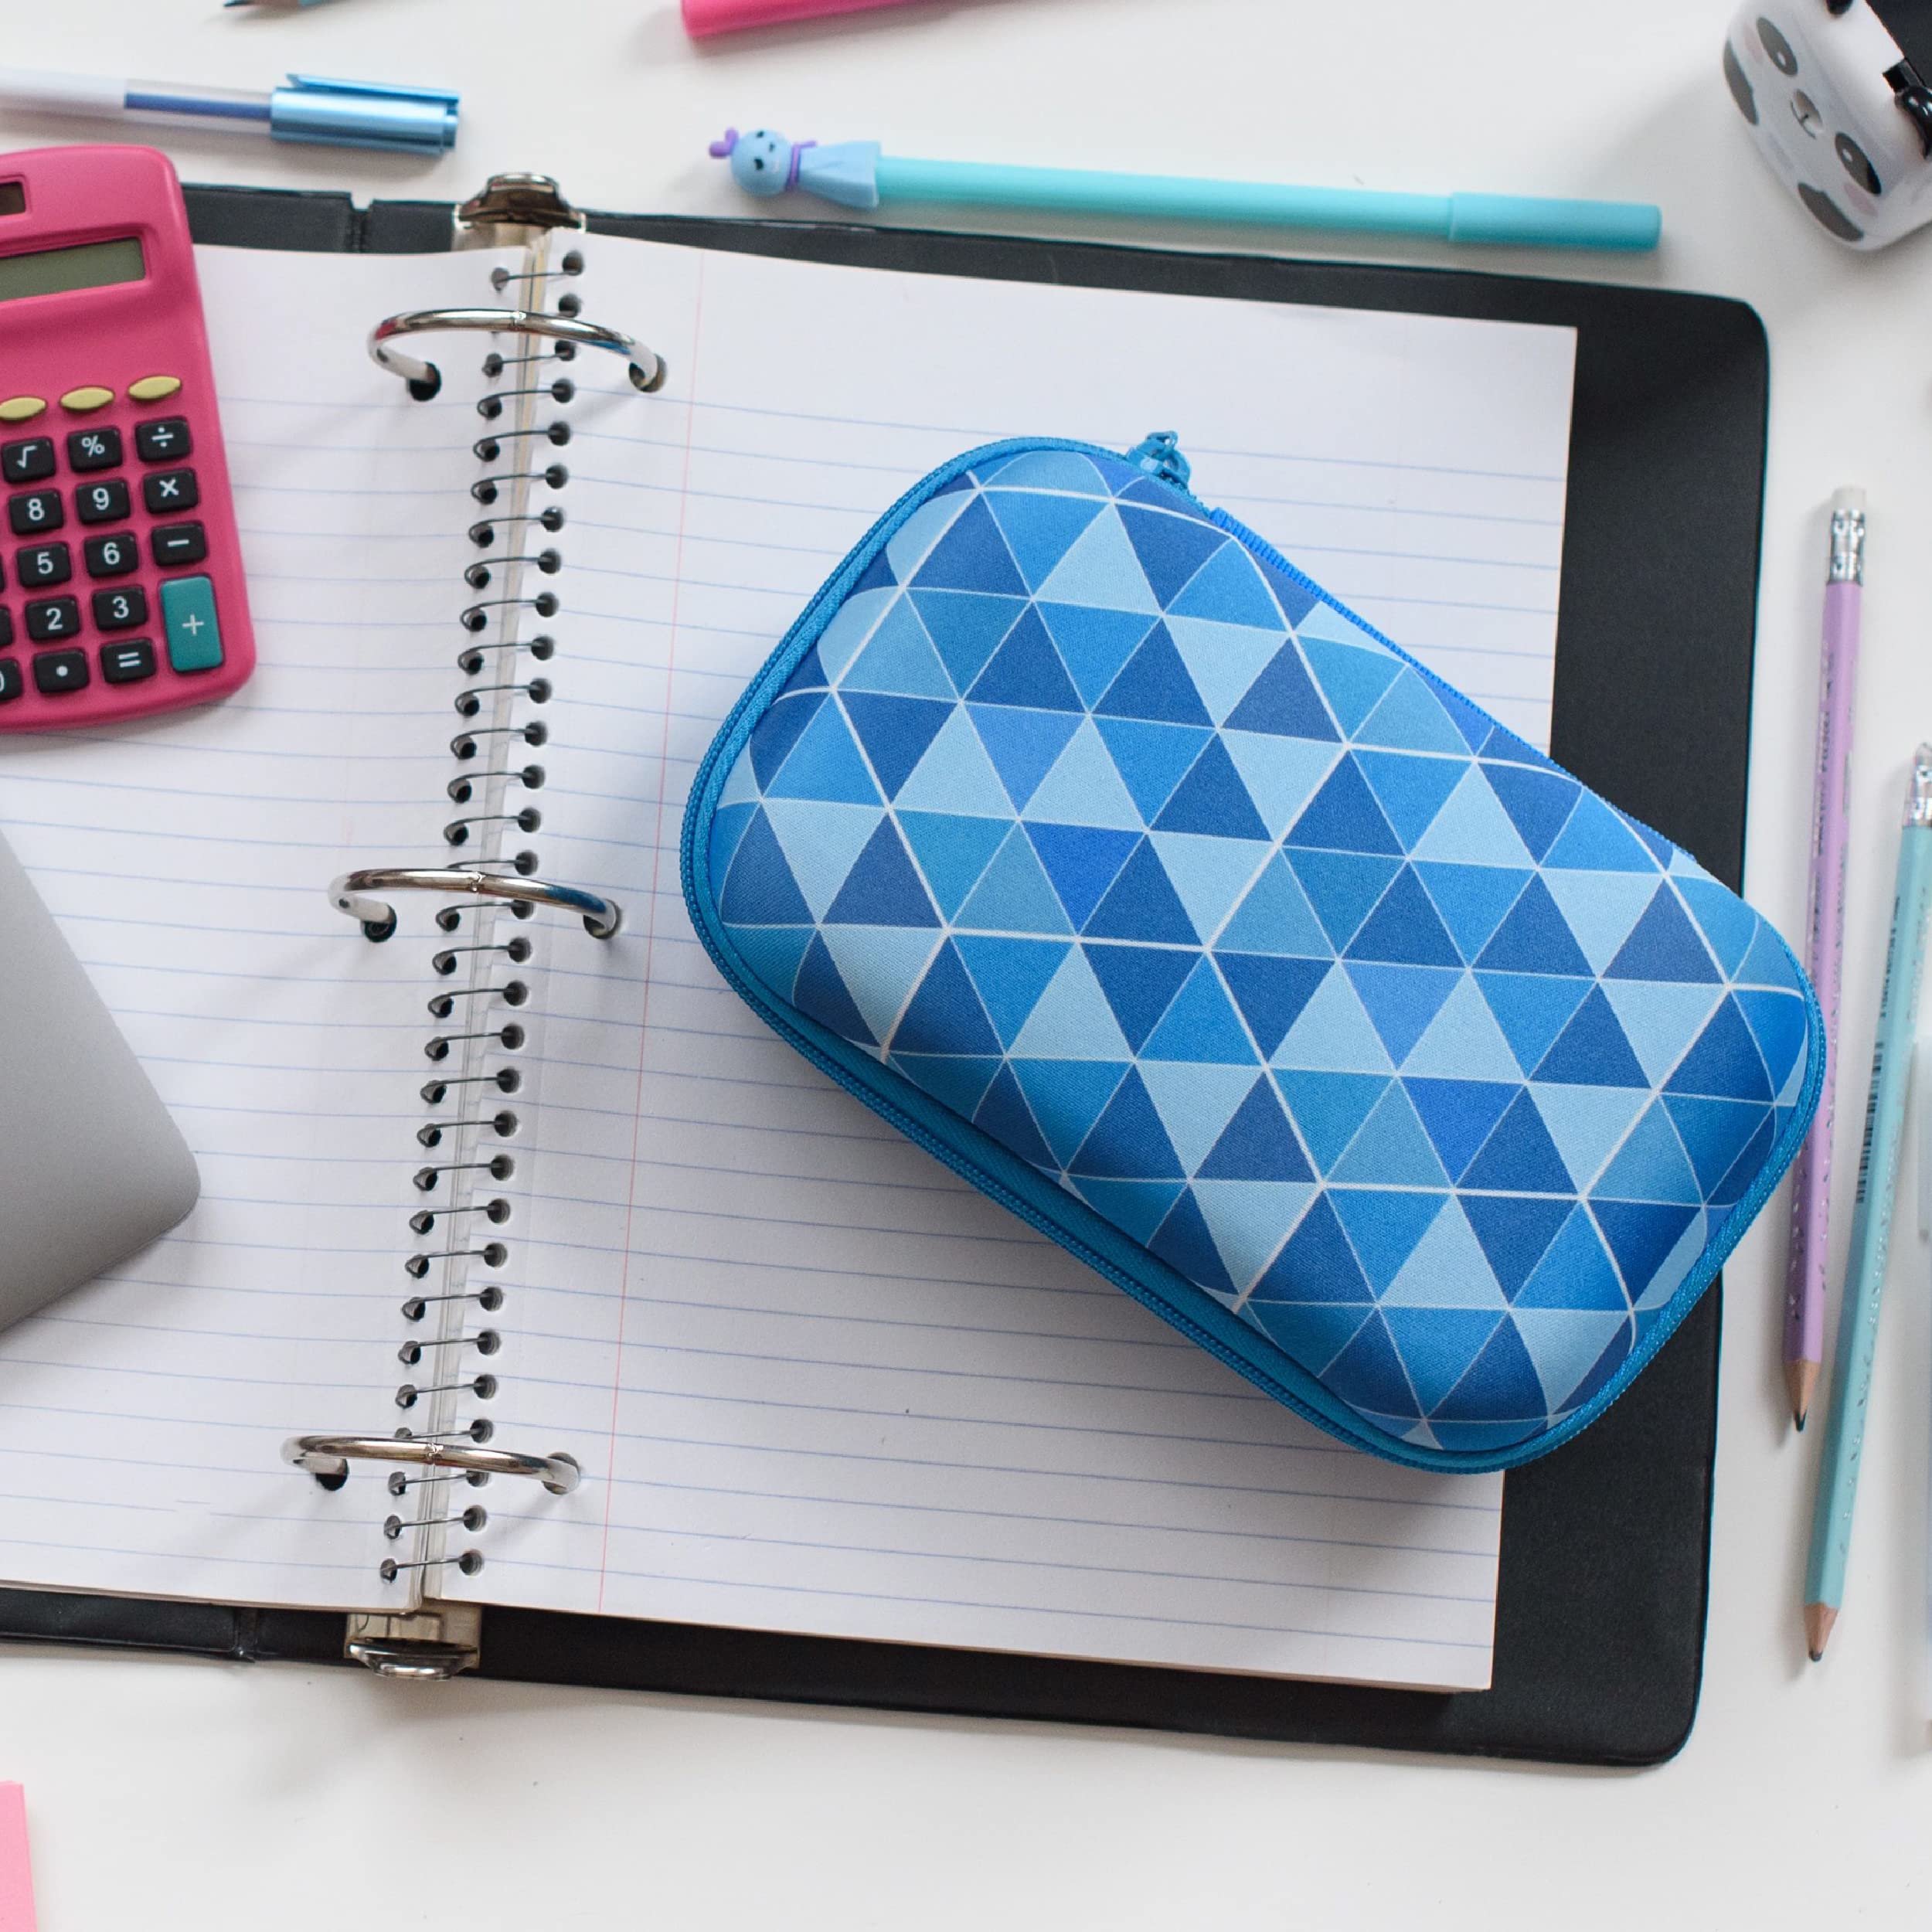 ZIPIT Blue Pencil Box for Boys | Pencil Case for School | Organizer Pencil Bag | Large Capacity Pencil Pouch